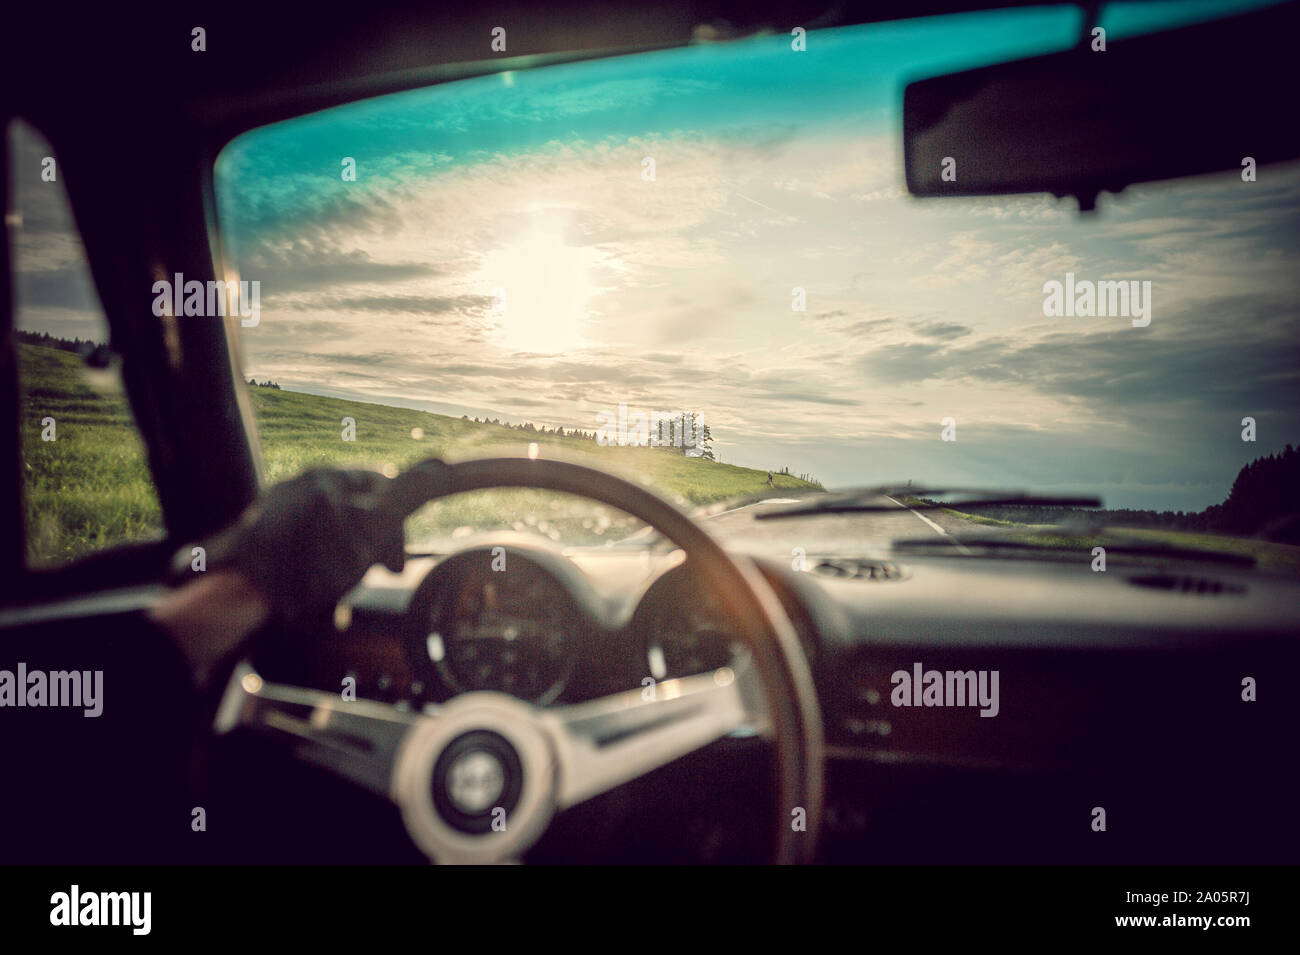 Klassische Alfa Romeo Auto Fahrer anzeigen Stockfoto